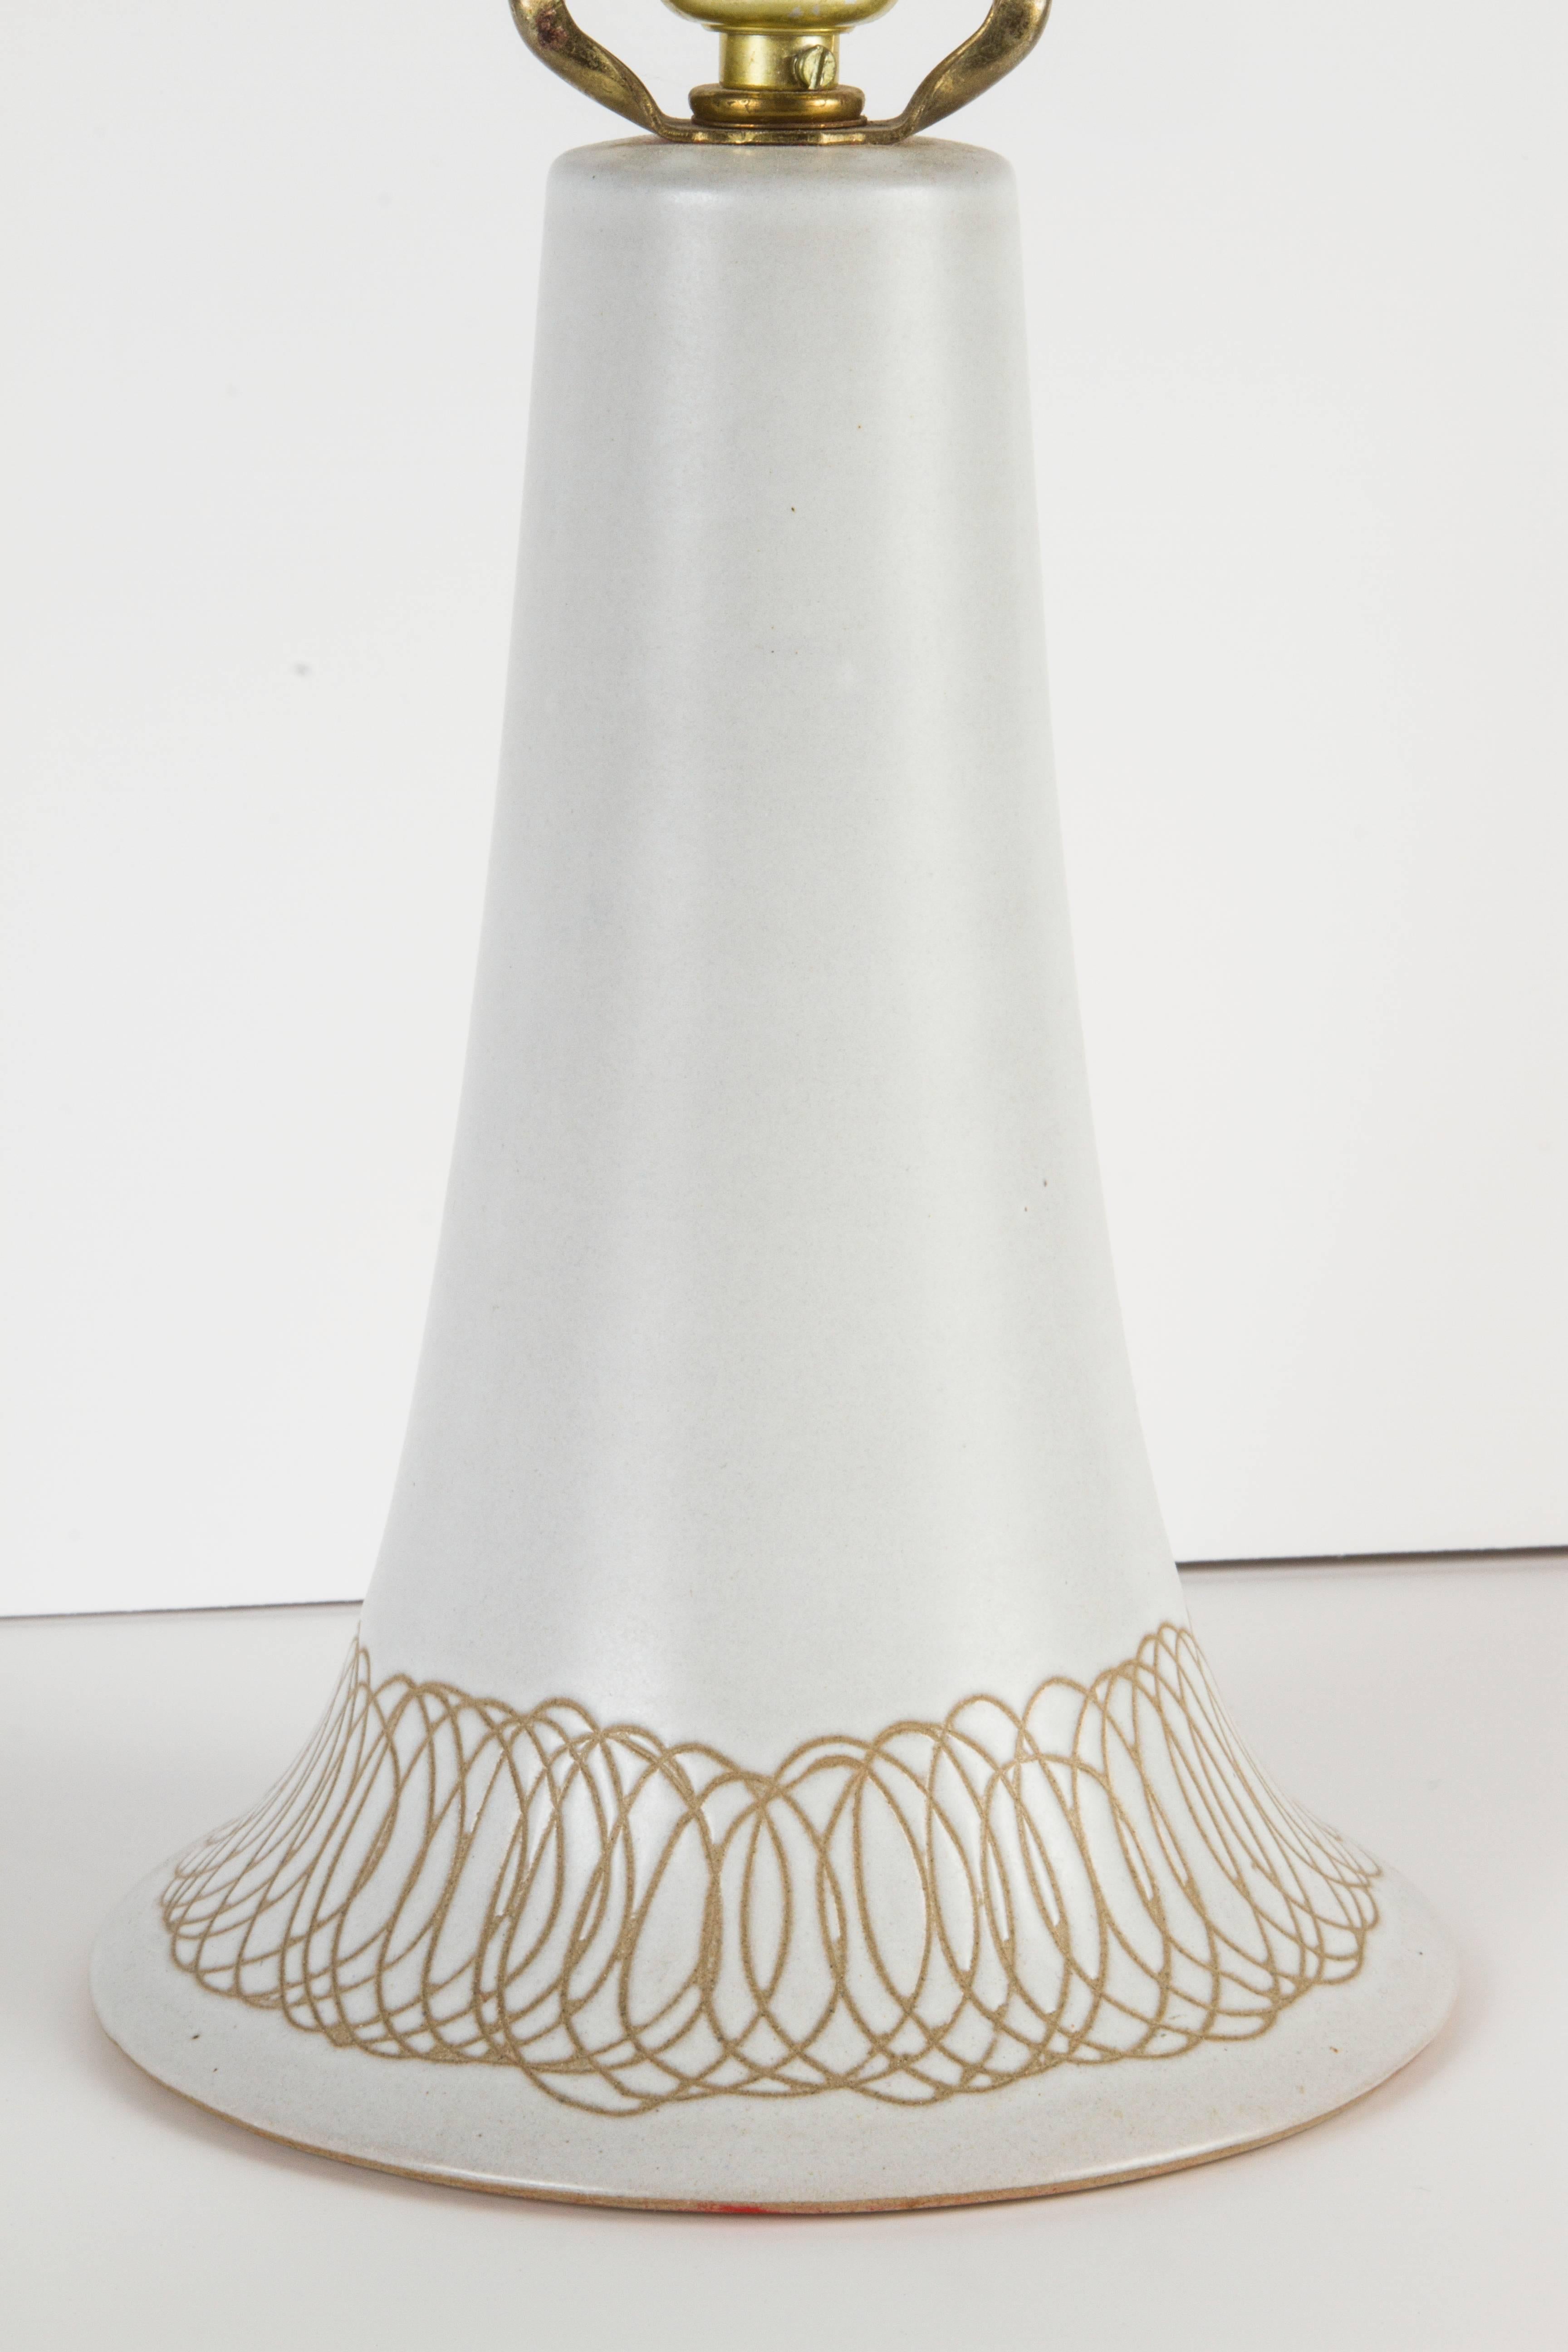 American Pair of Martz Sgraffito Table Lamps